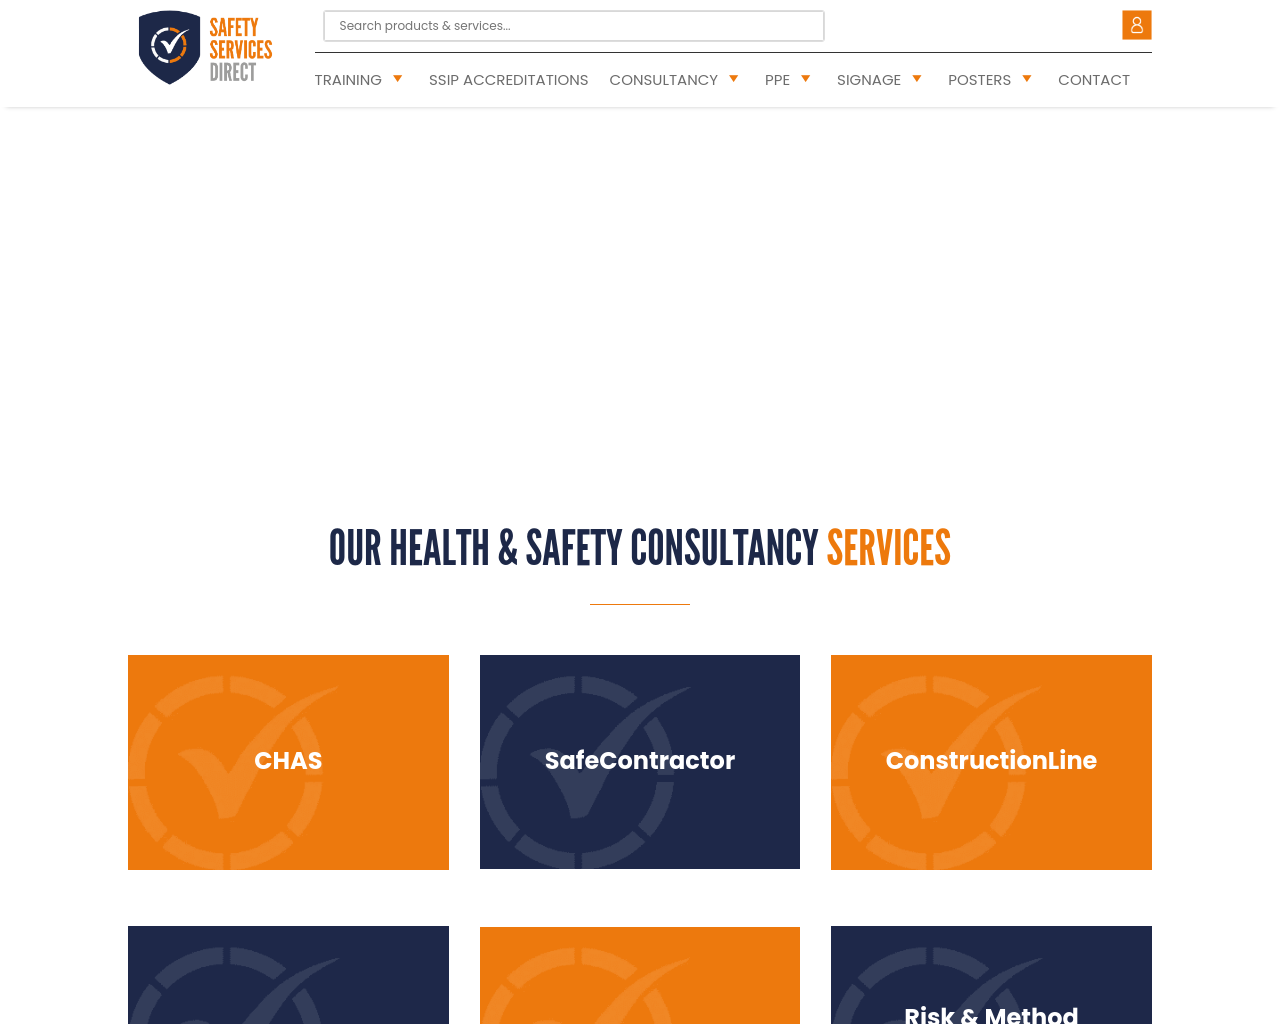 safetyservicesdirect.com